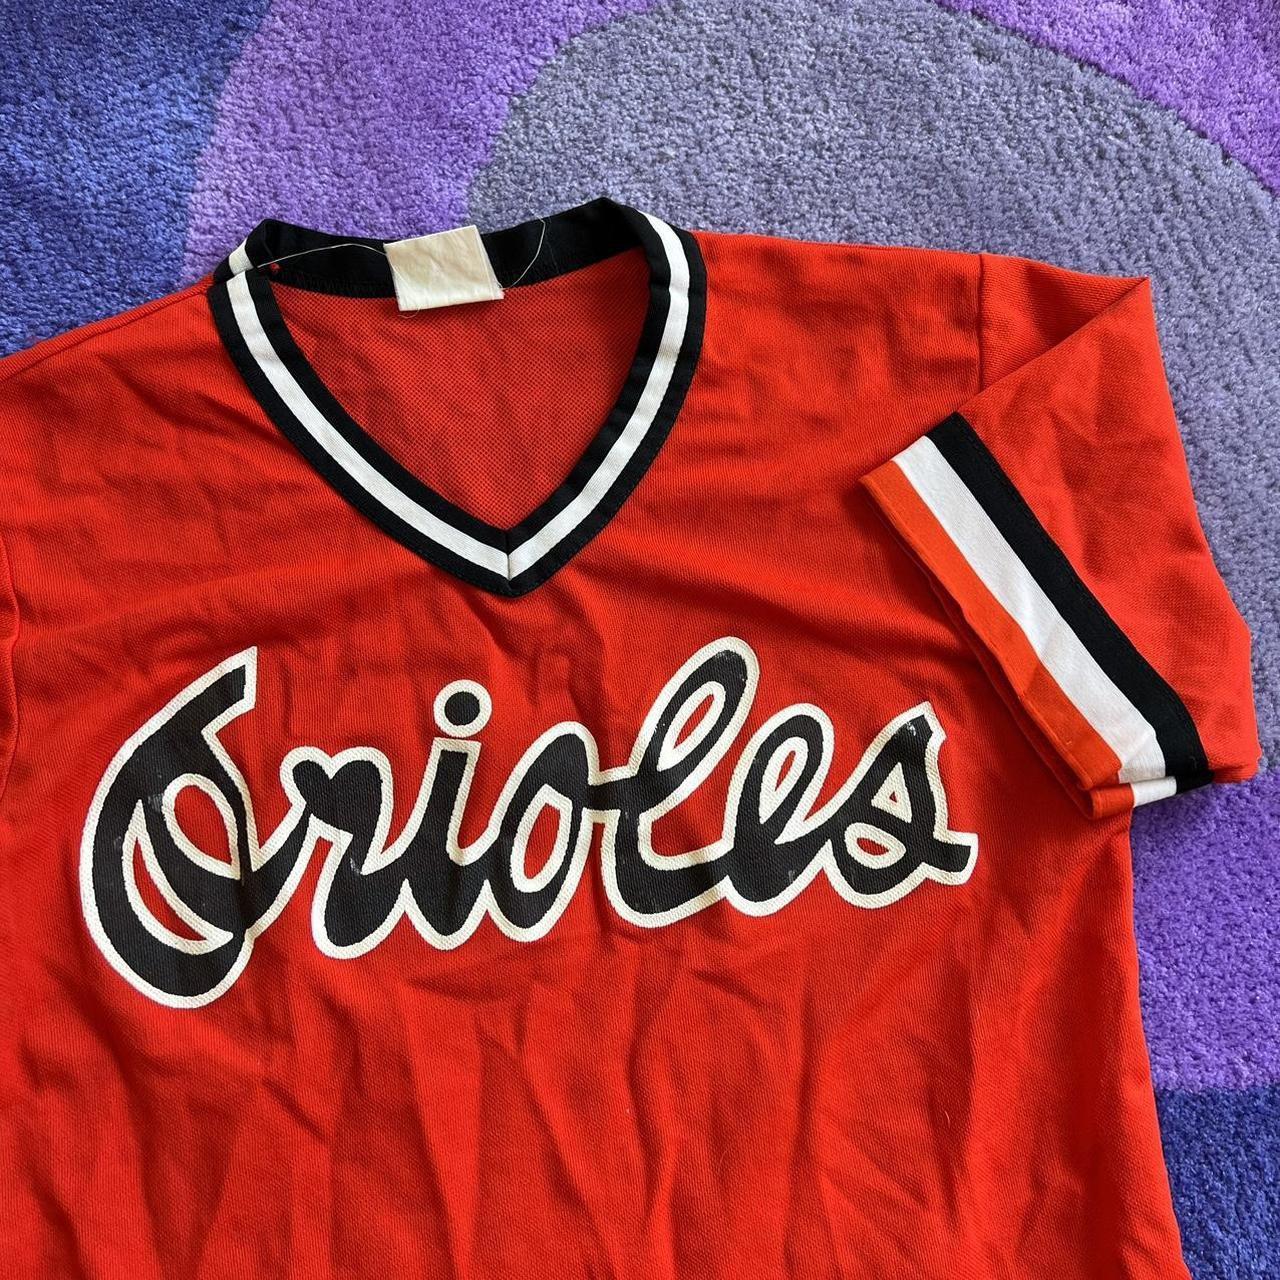 Vintage 1980s Baltimore Orioles Baseball Jersey - Depop